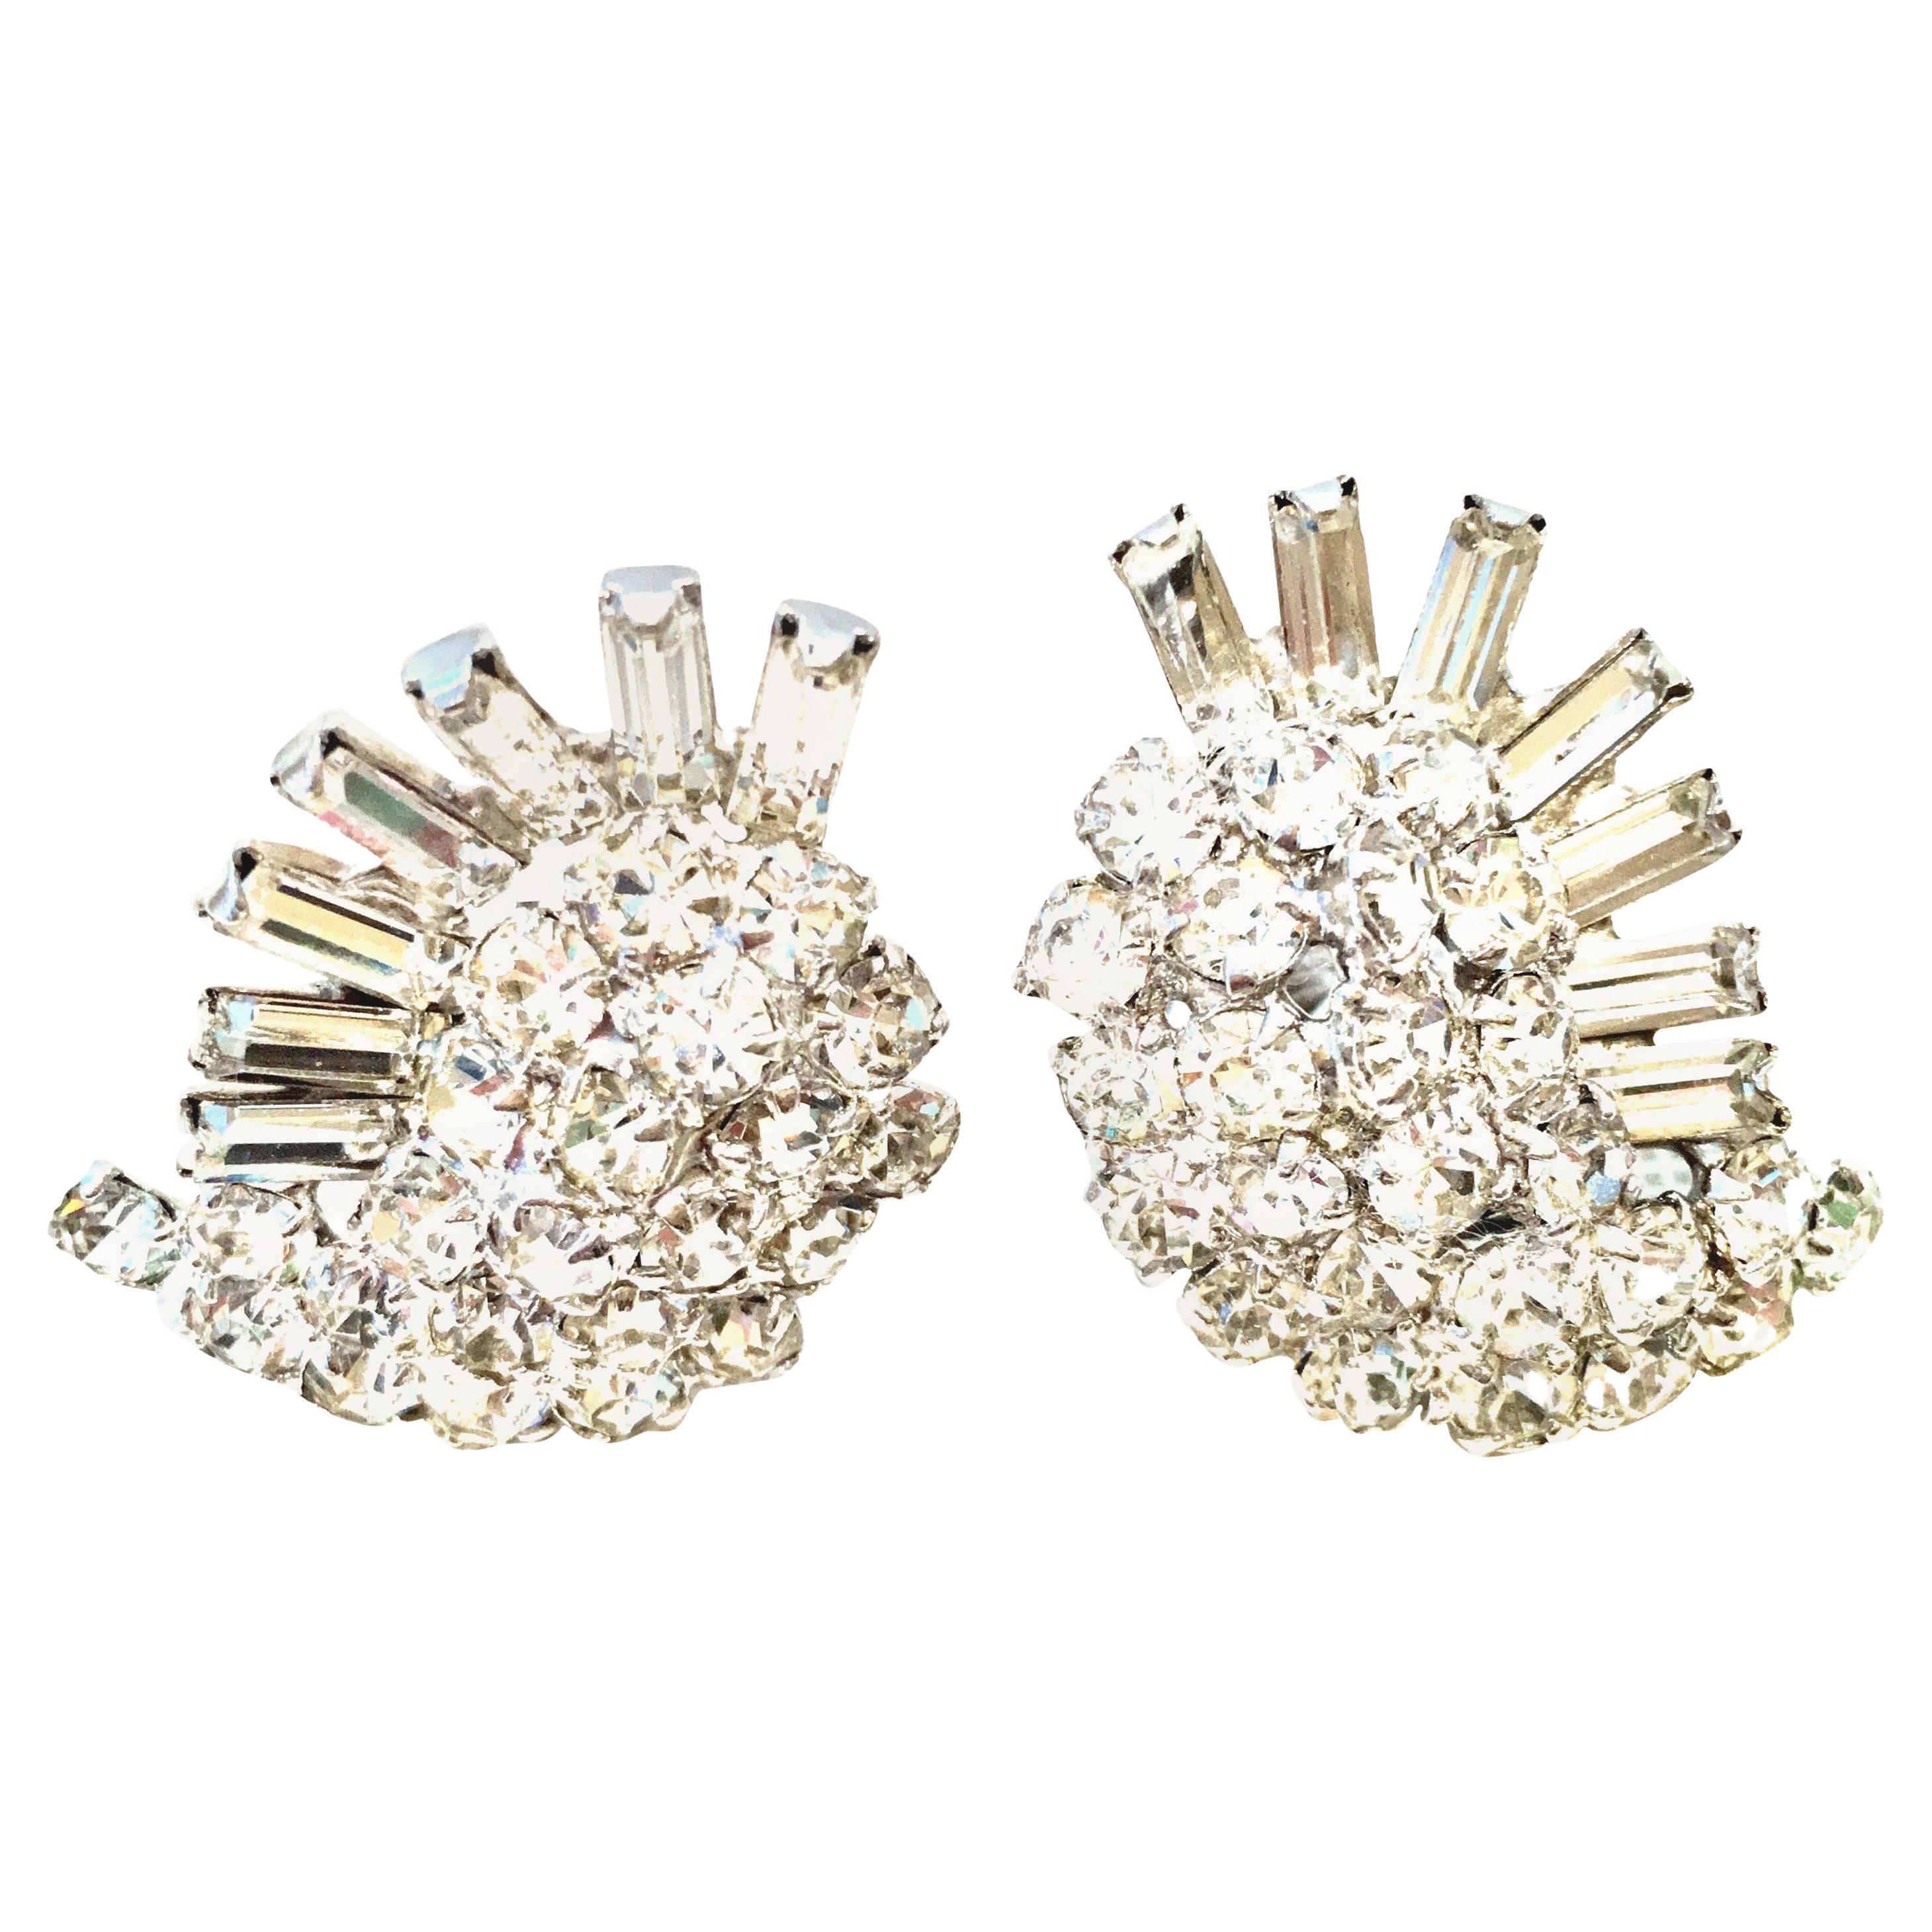 60's Weiss Style Silver & Austrian Crystal "Snail" Form Earrings For Sale